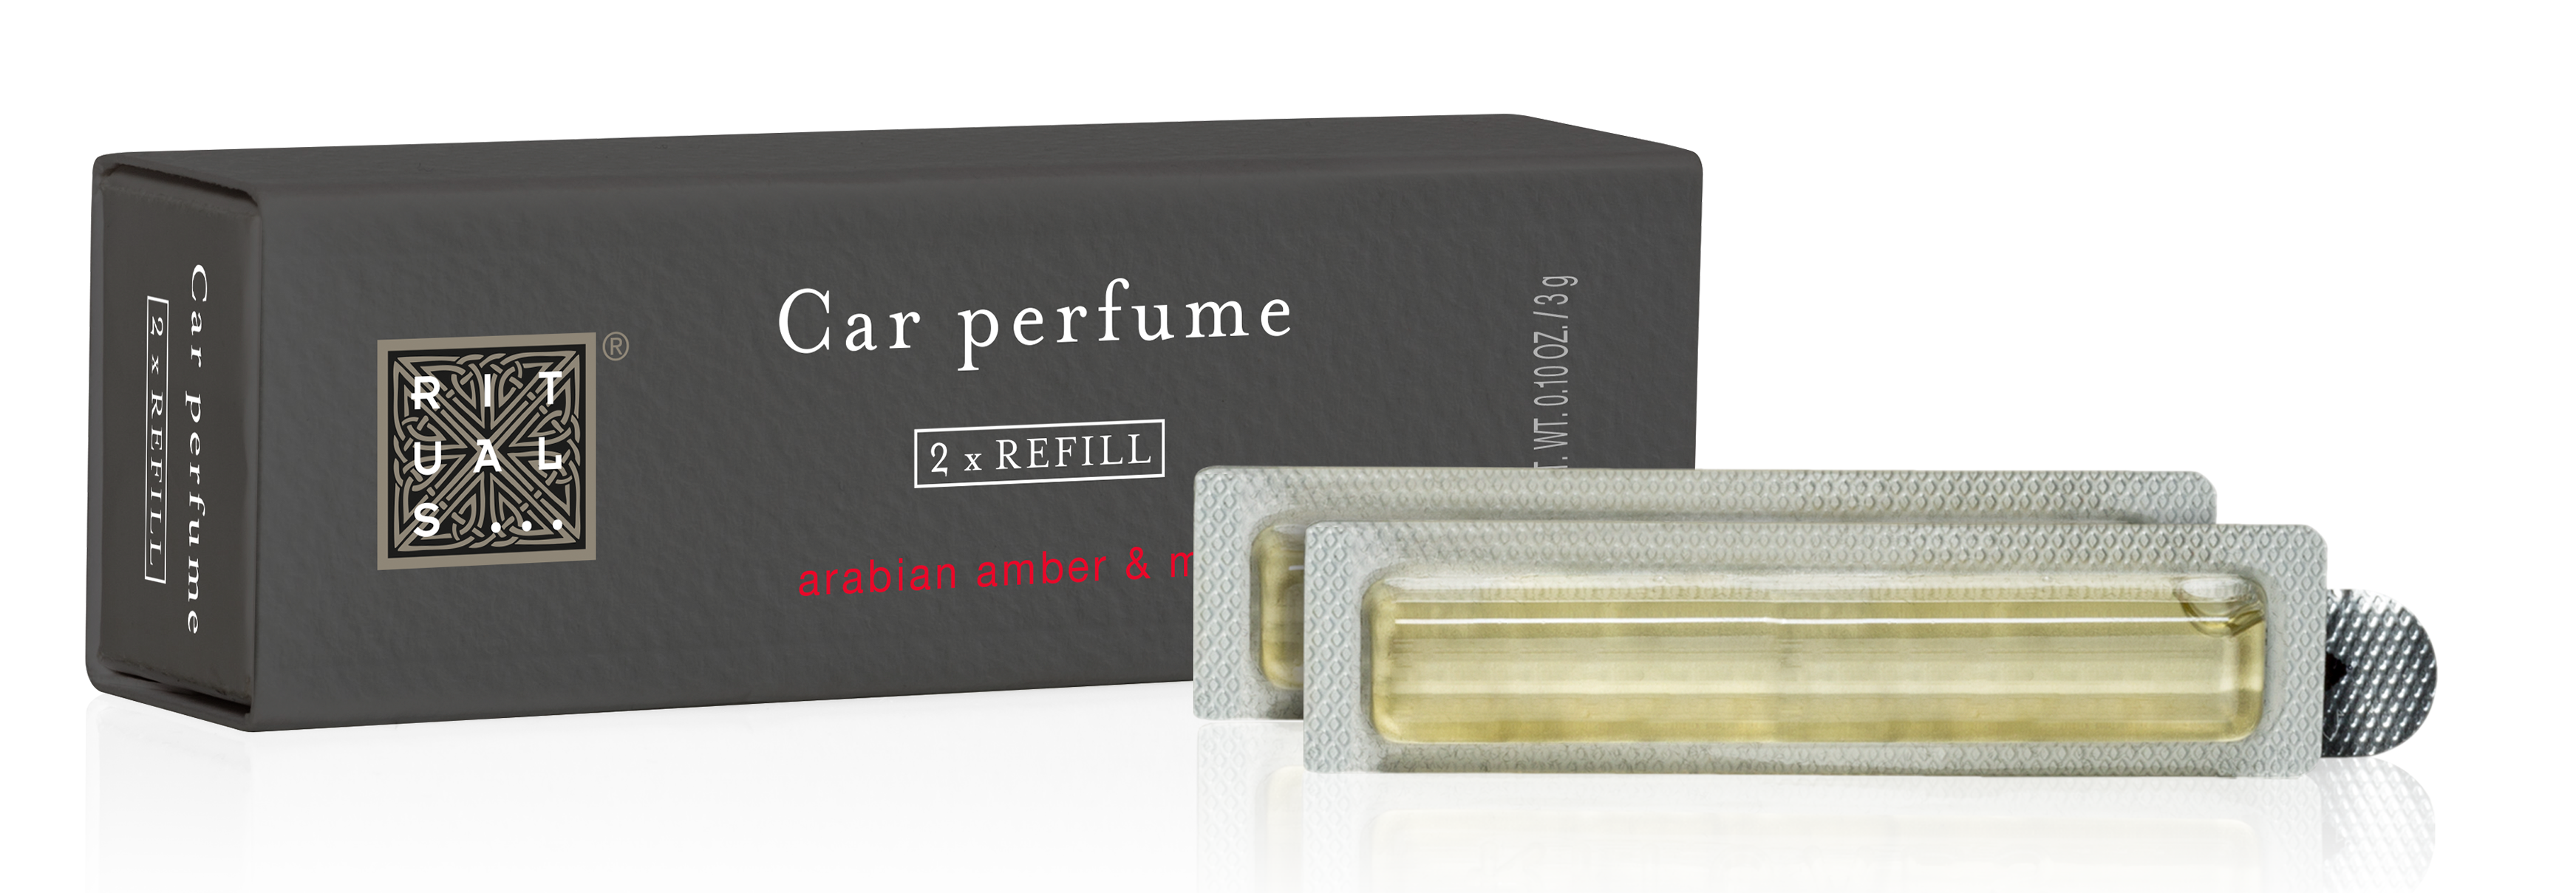 Rituals: The Ritual of Samurai car perfume, 6 g : : Beauty